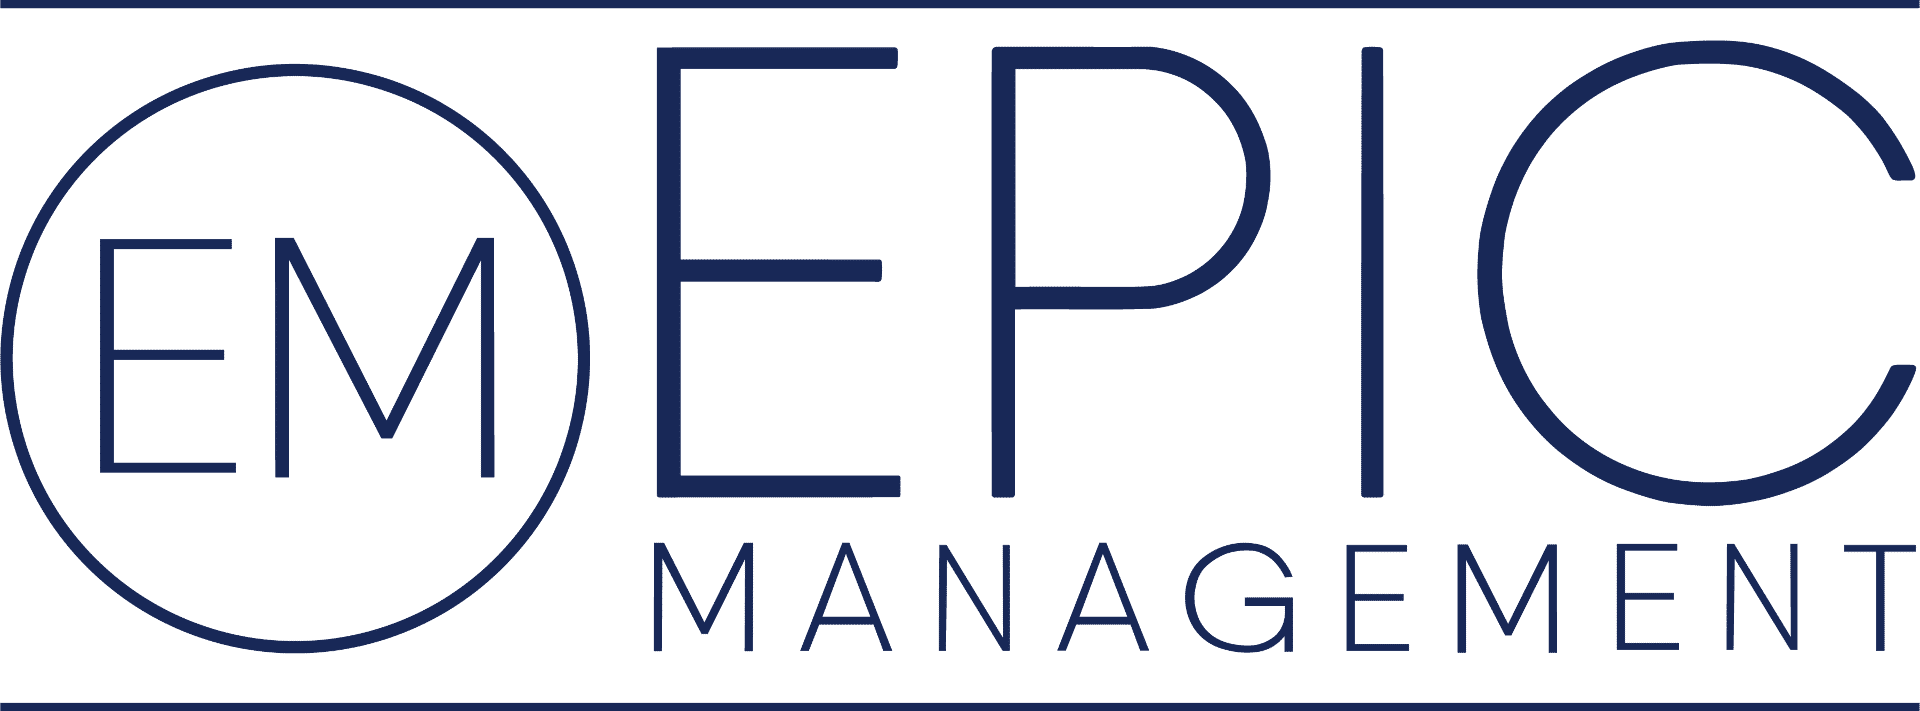 EPIC Management Logo